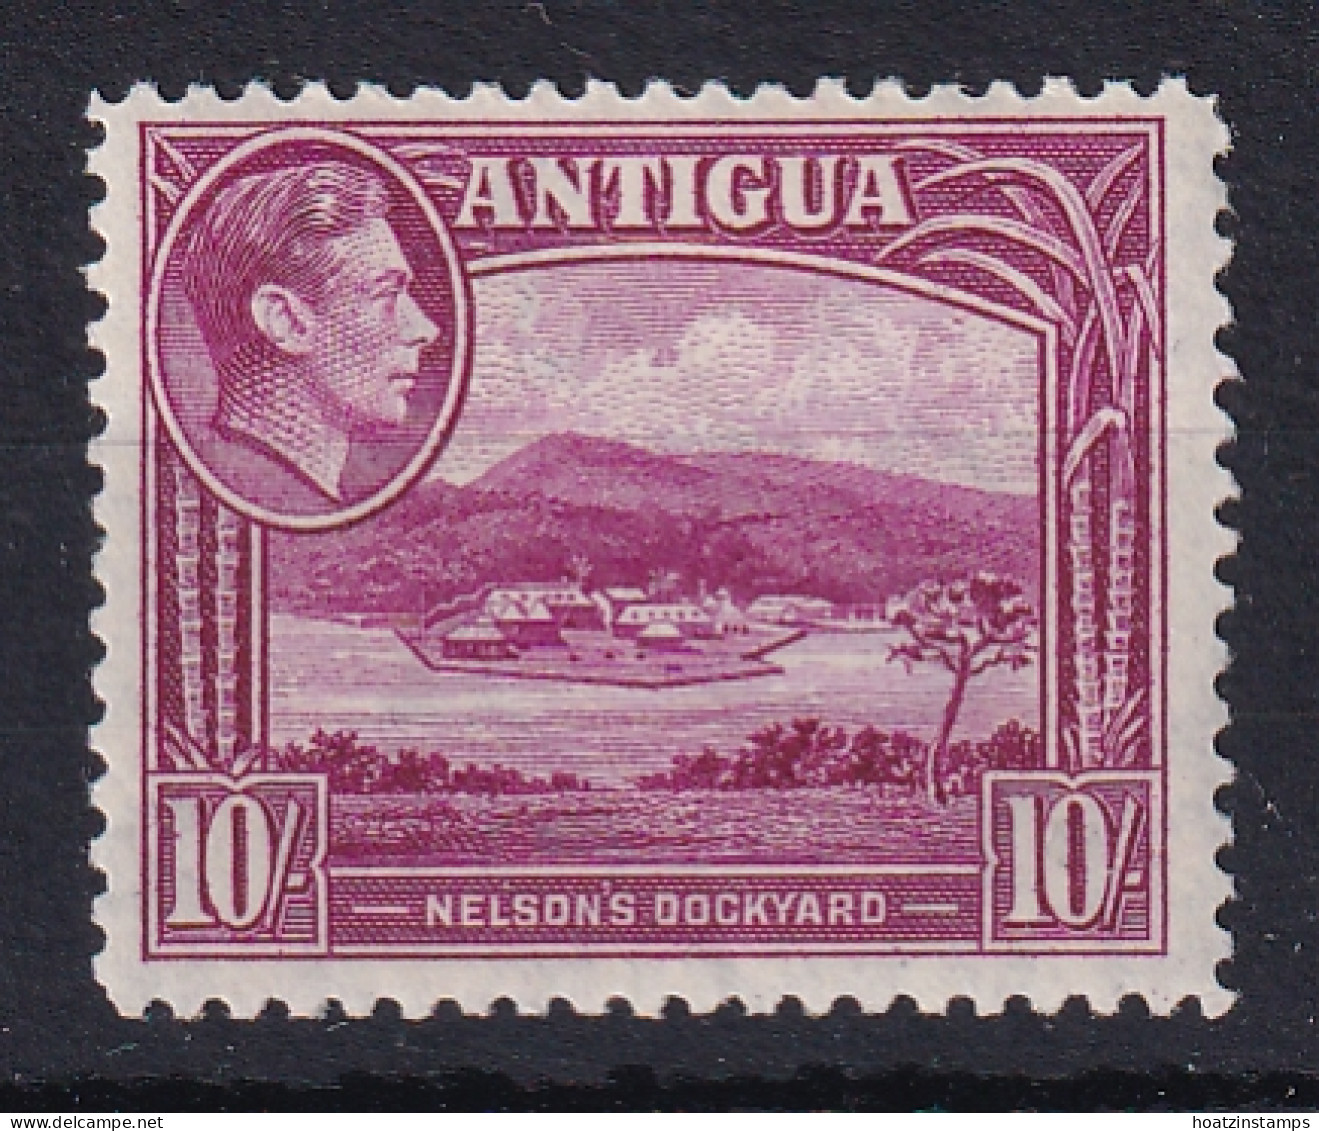 Antigua: 1938/51   KGVI    SG108    10/-      MH - 1858-1960 Crown Colony